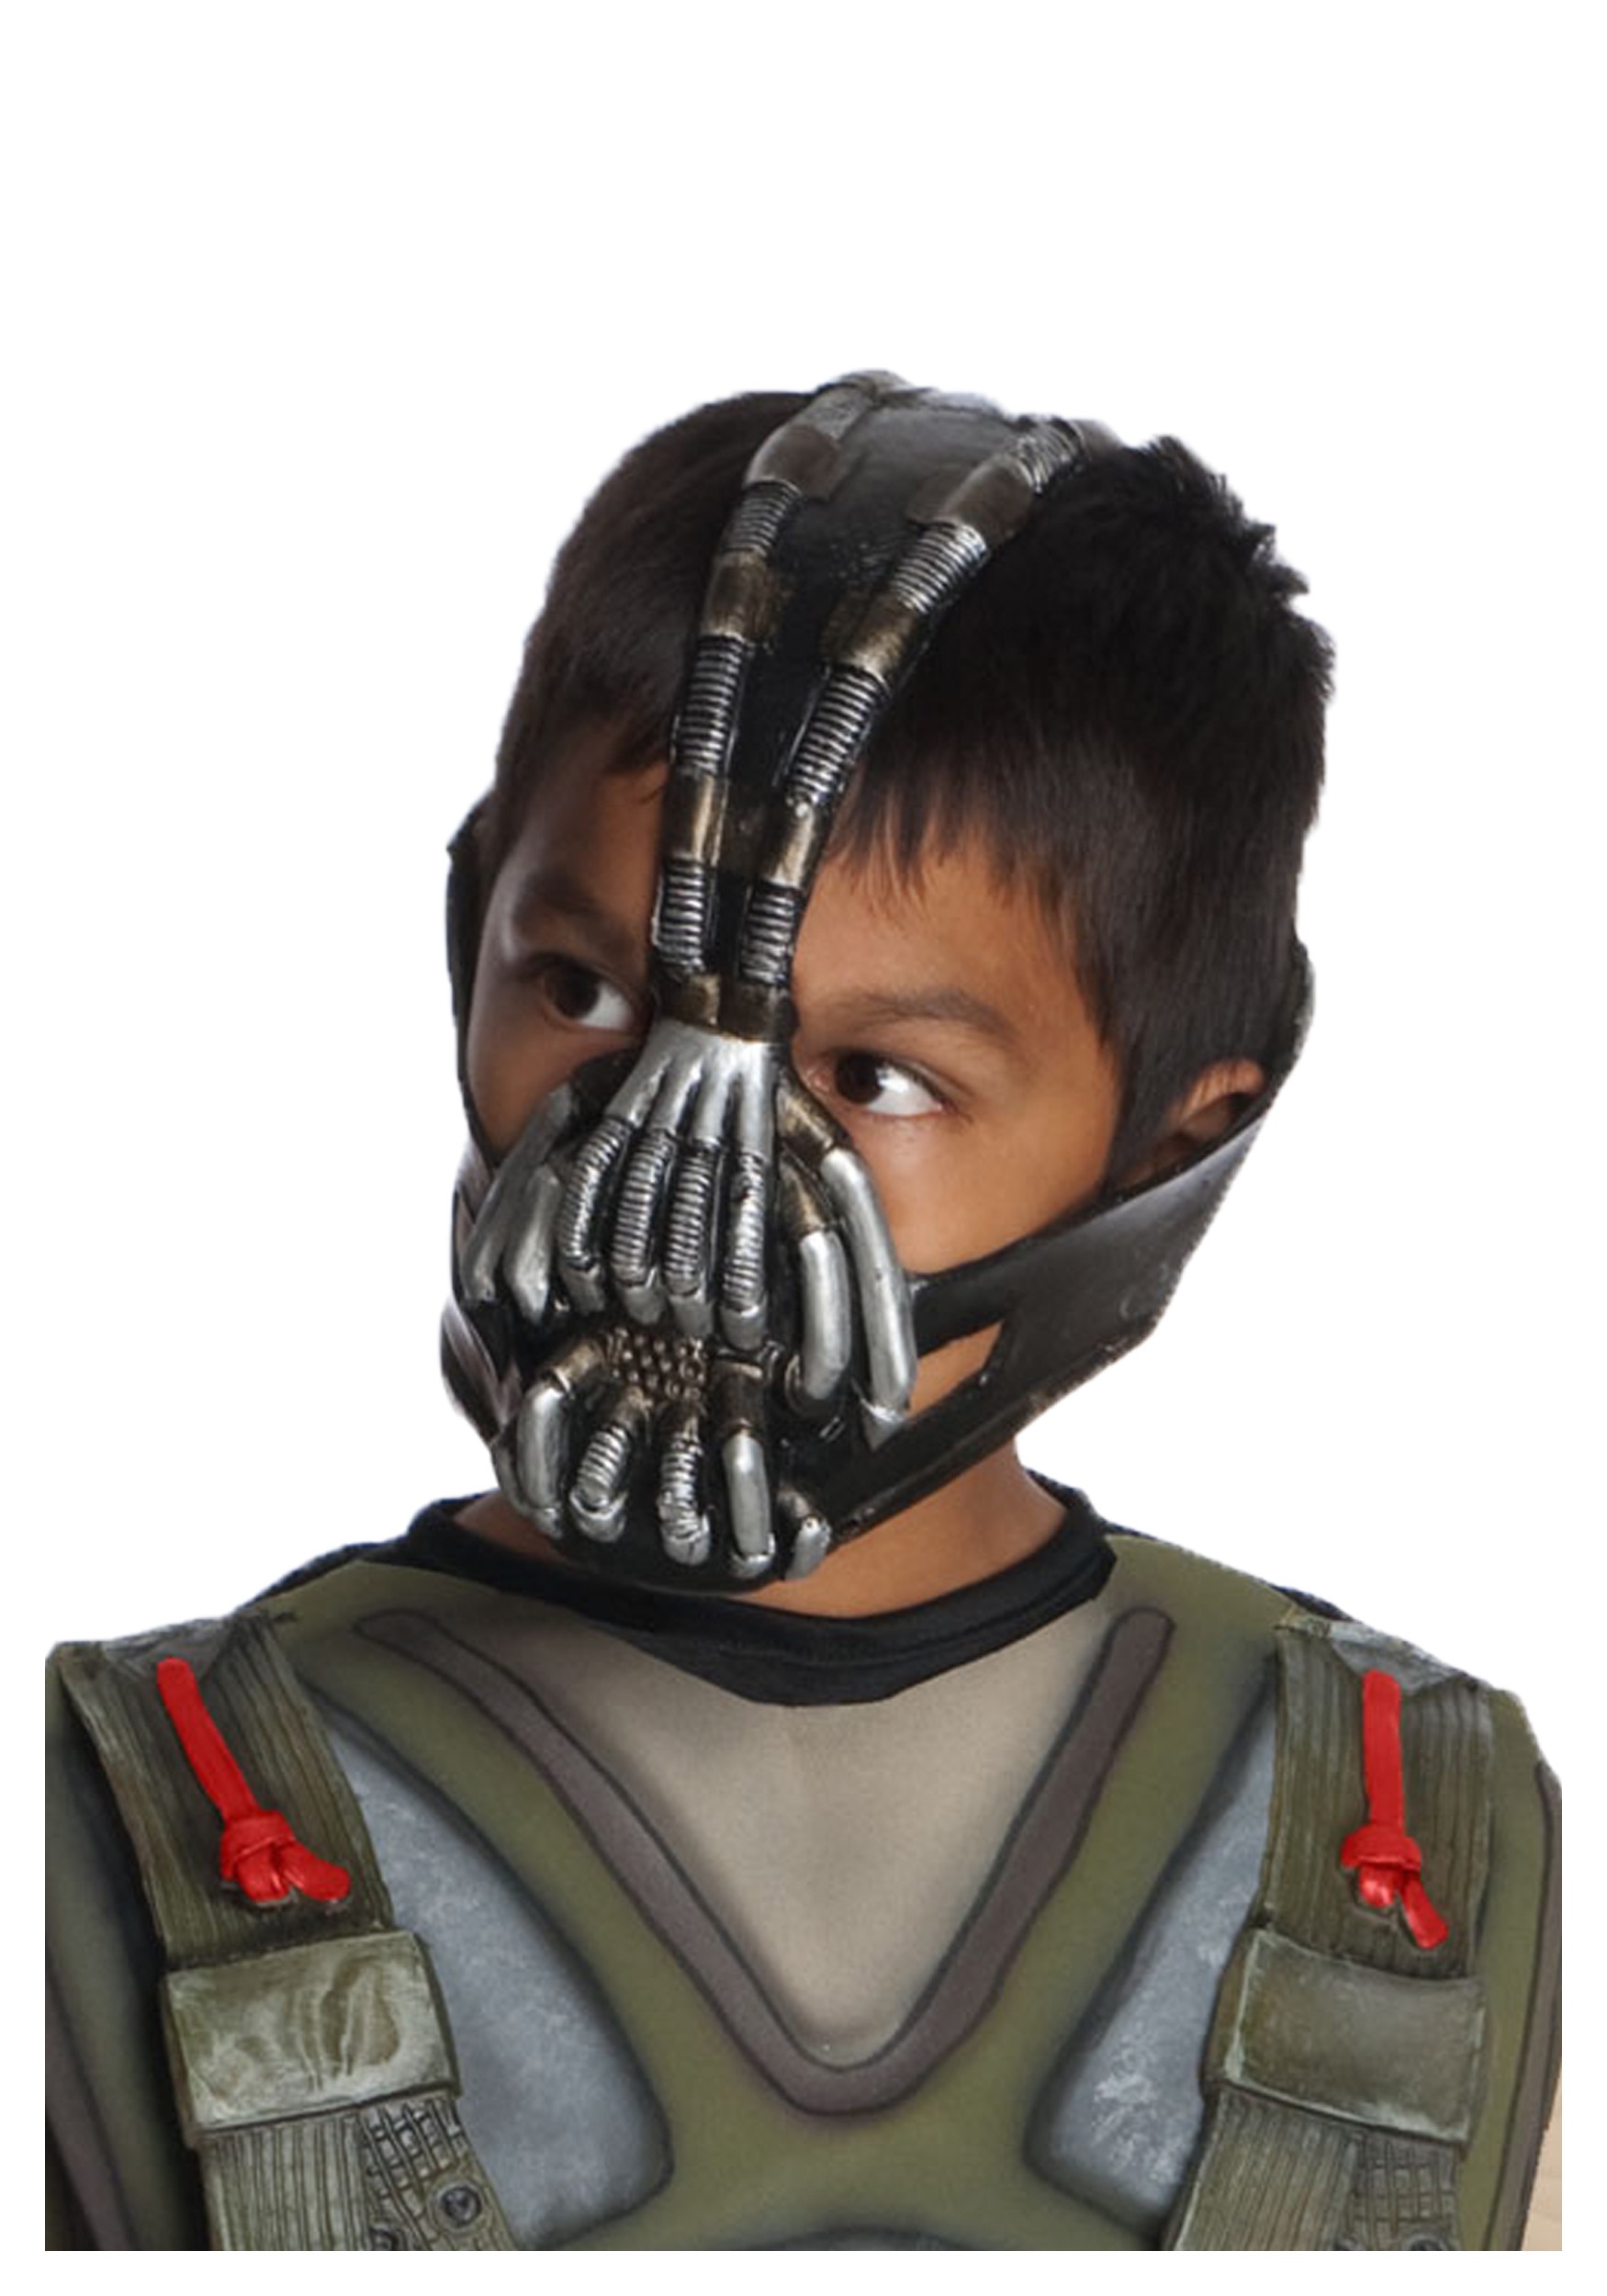 bane costume for kids